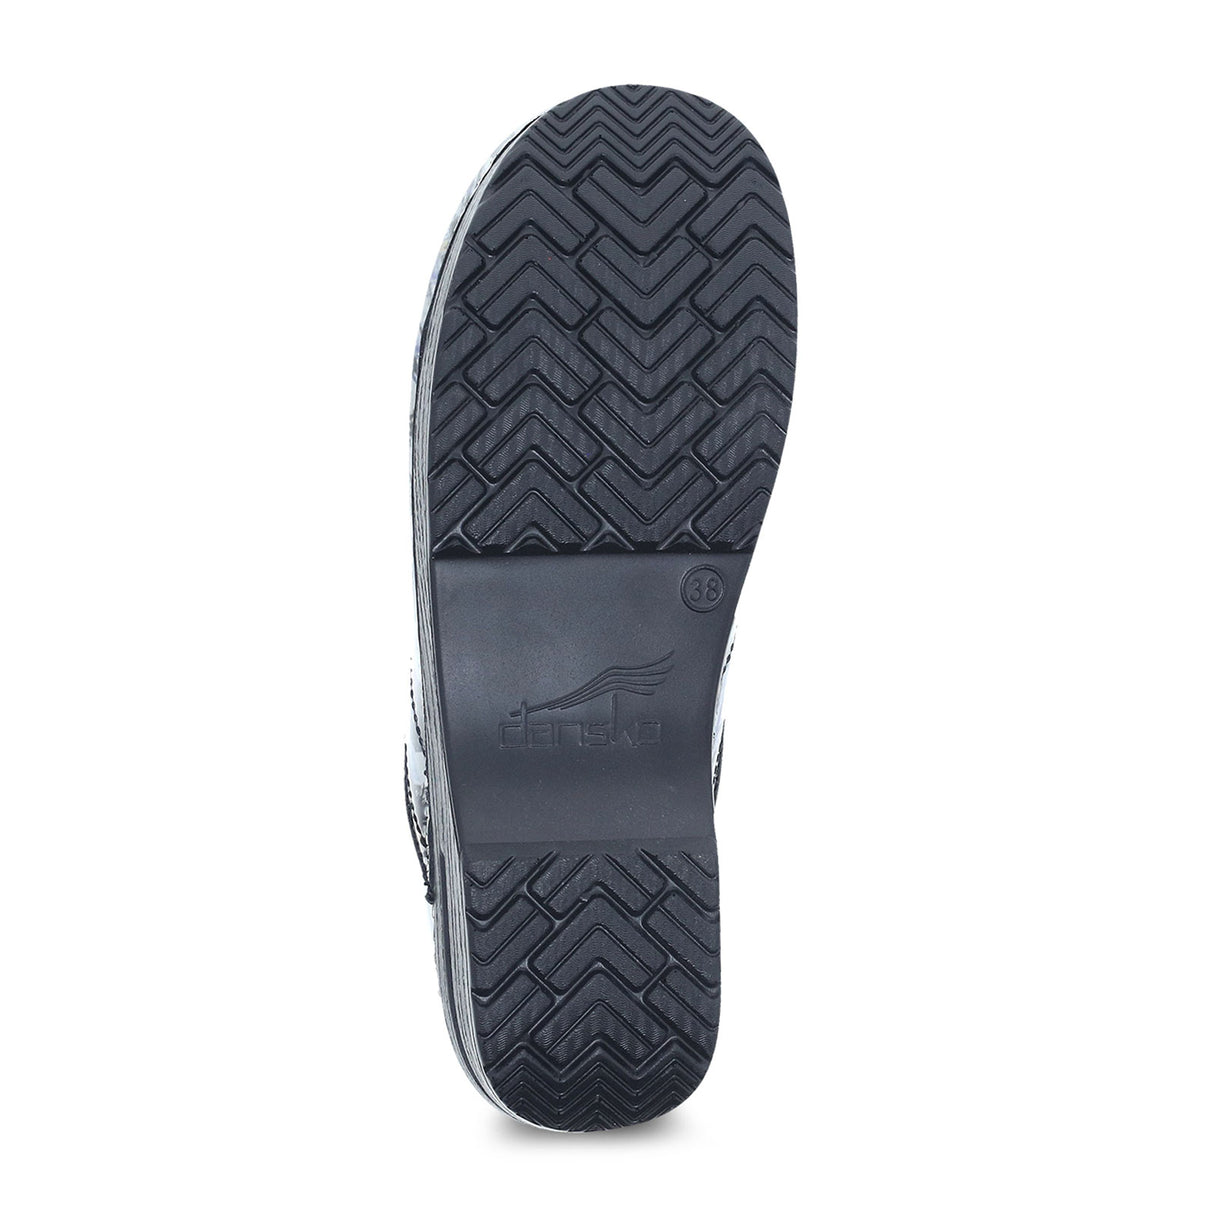 Dansko Professional Clog (Women) - Crisscross Patent Dress-Casual - Clogs & Mules - The Heel Shoe Fitters